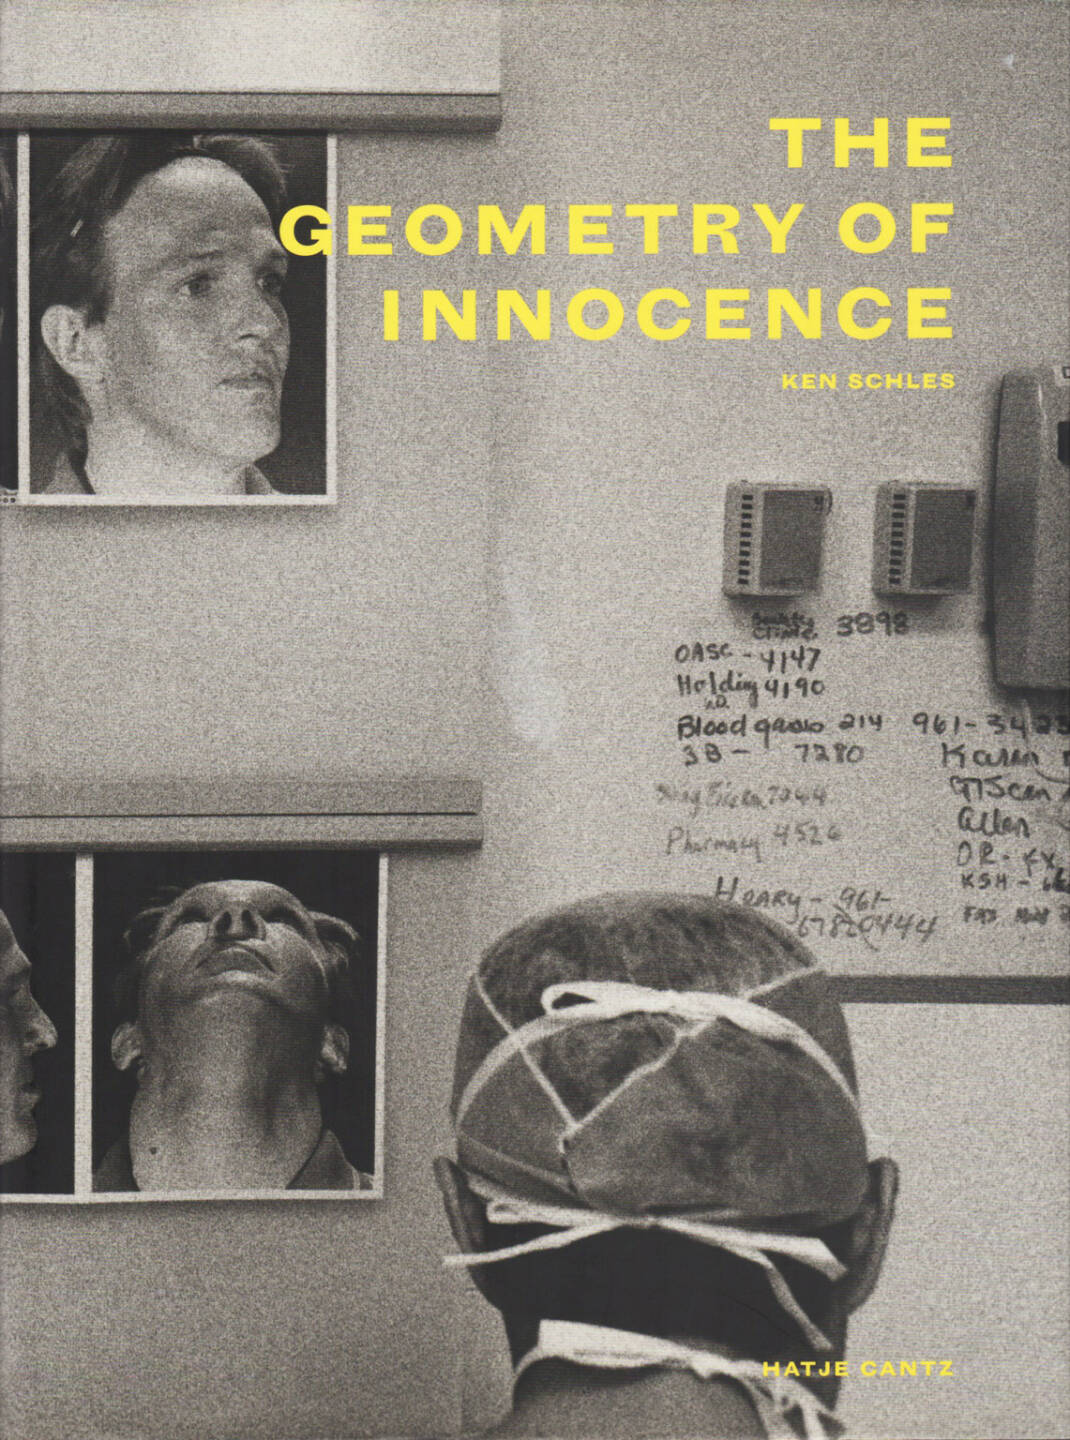 Ken Schles - The Geometry of Innocence, Hatje Cantz, 2001, Cover - http://josefchladek.com/book/ken_schles_-_the_geometry_of_innocence